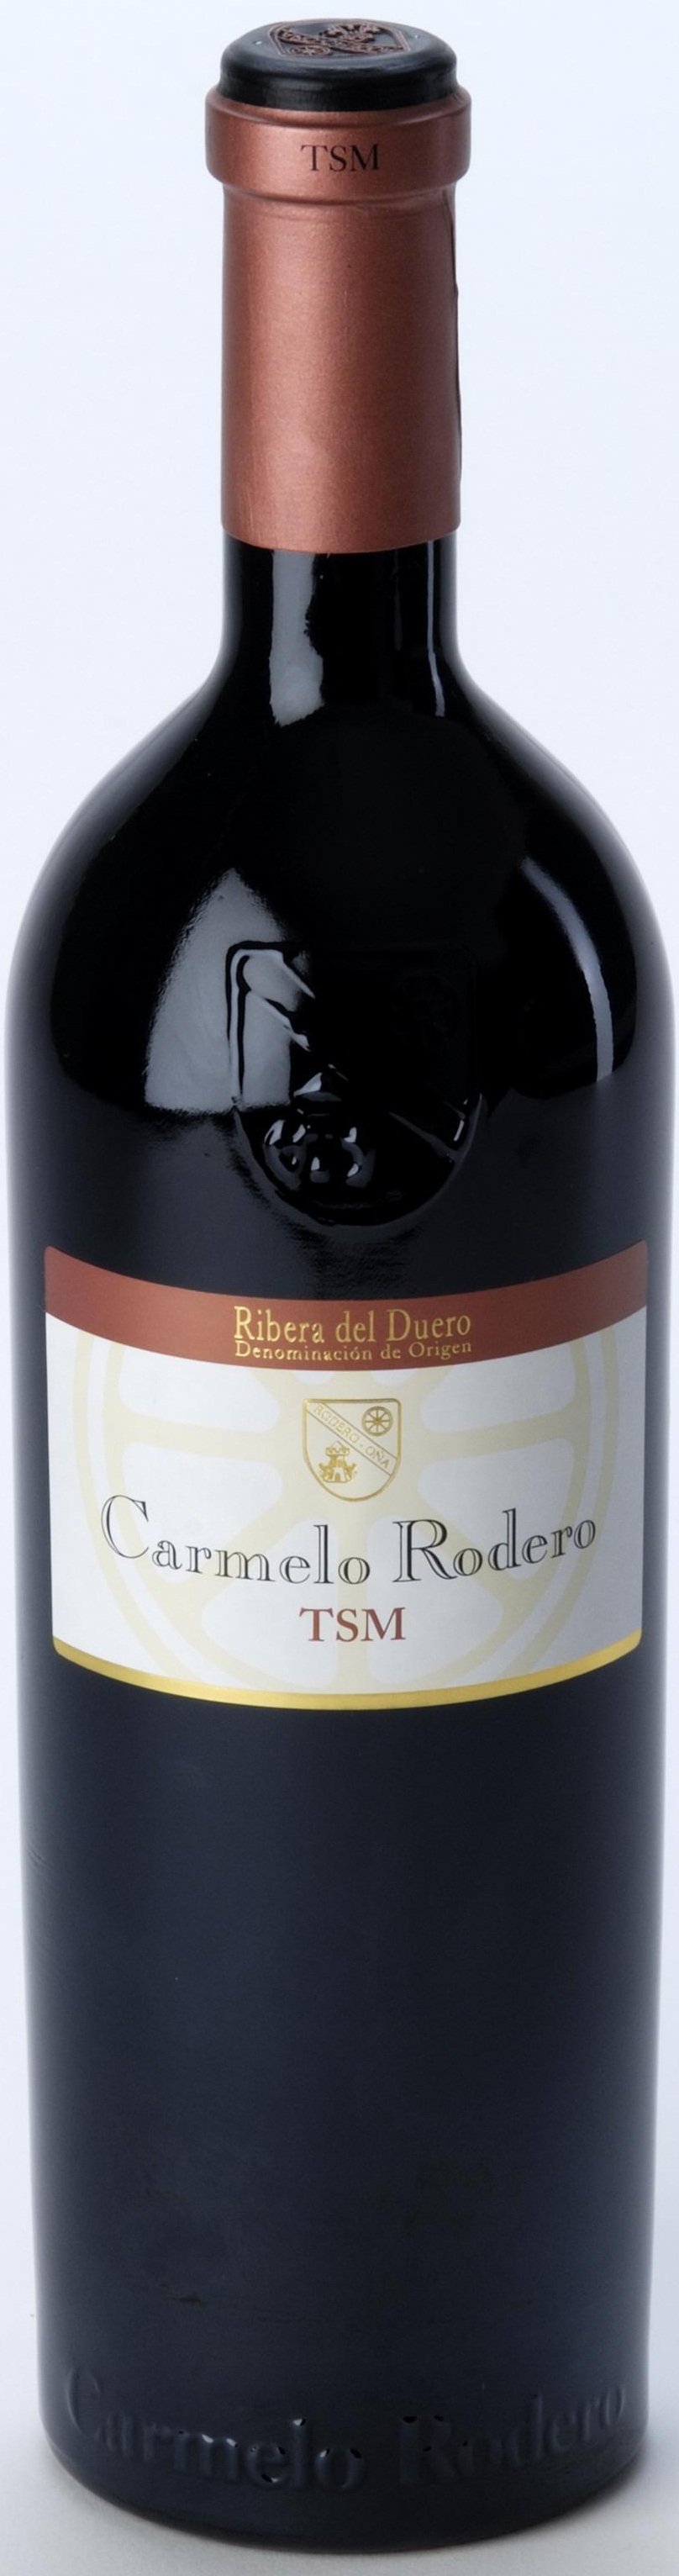 Image of Wine bottle Carmelo Rodero TSM